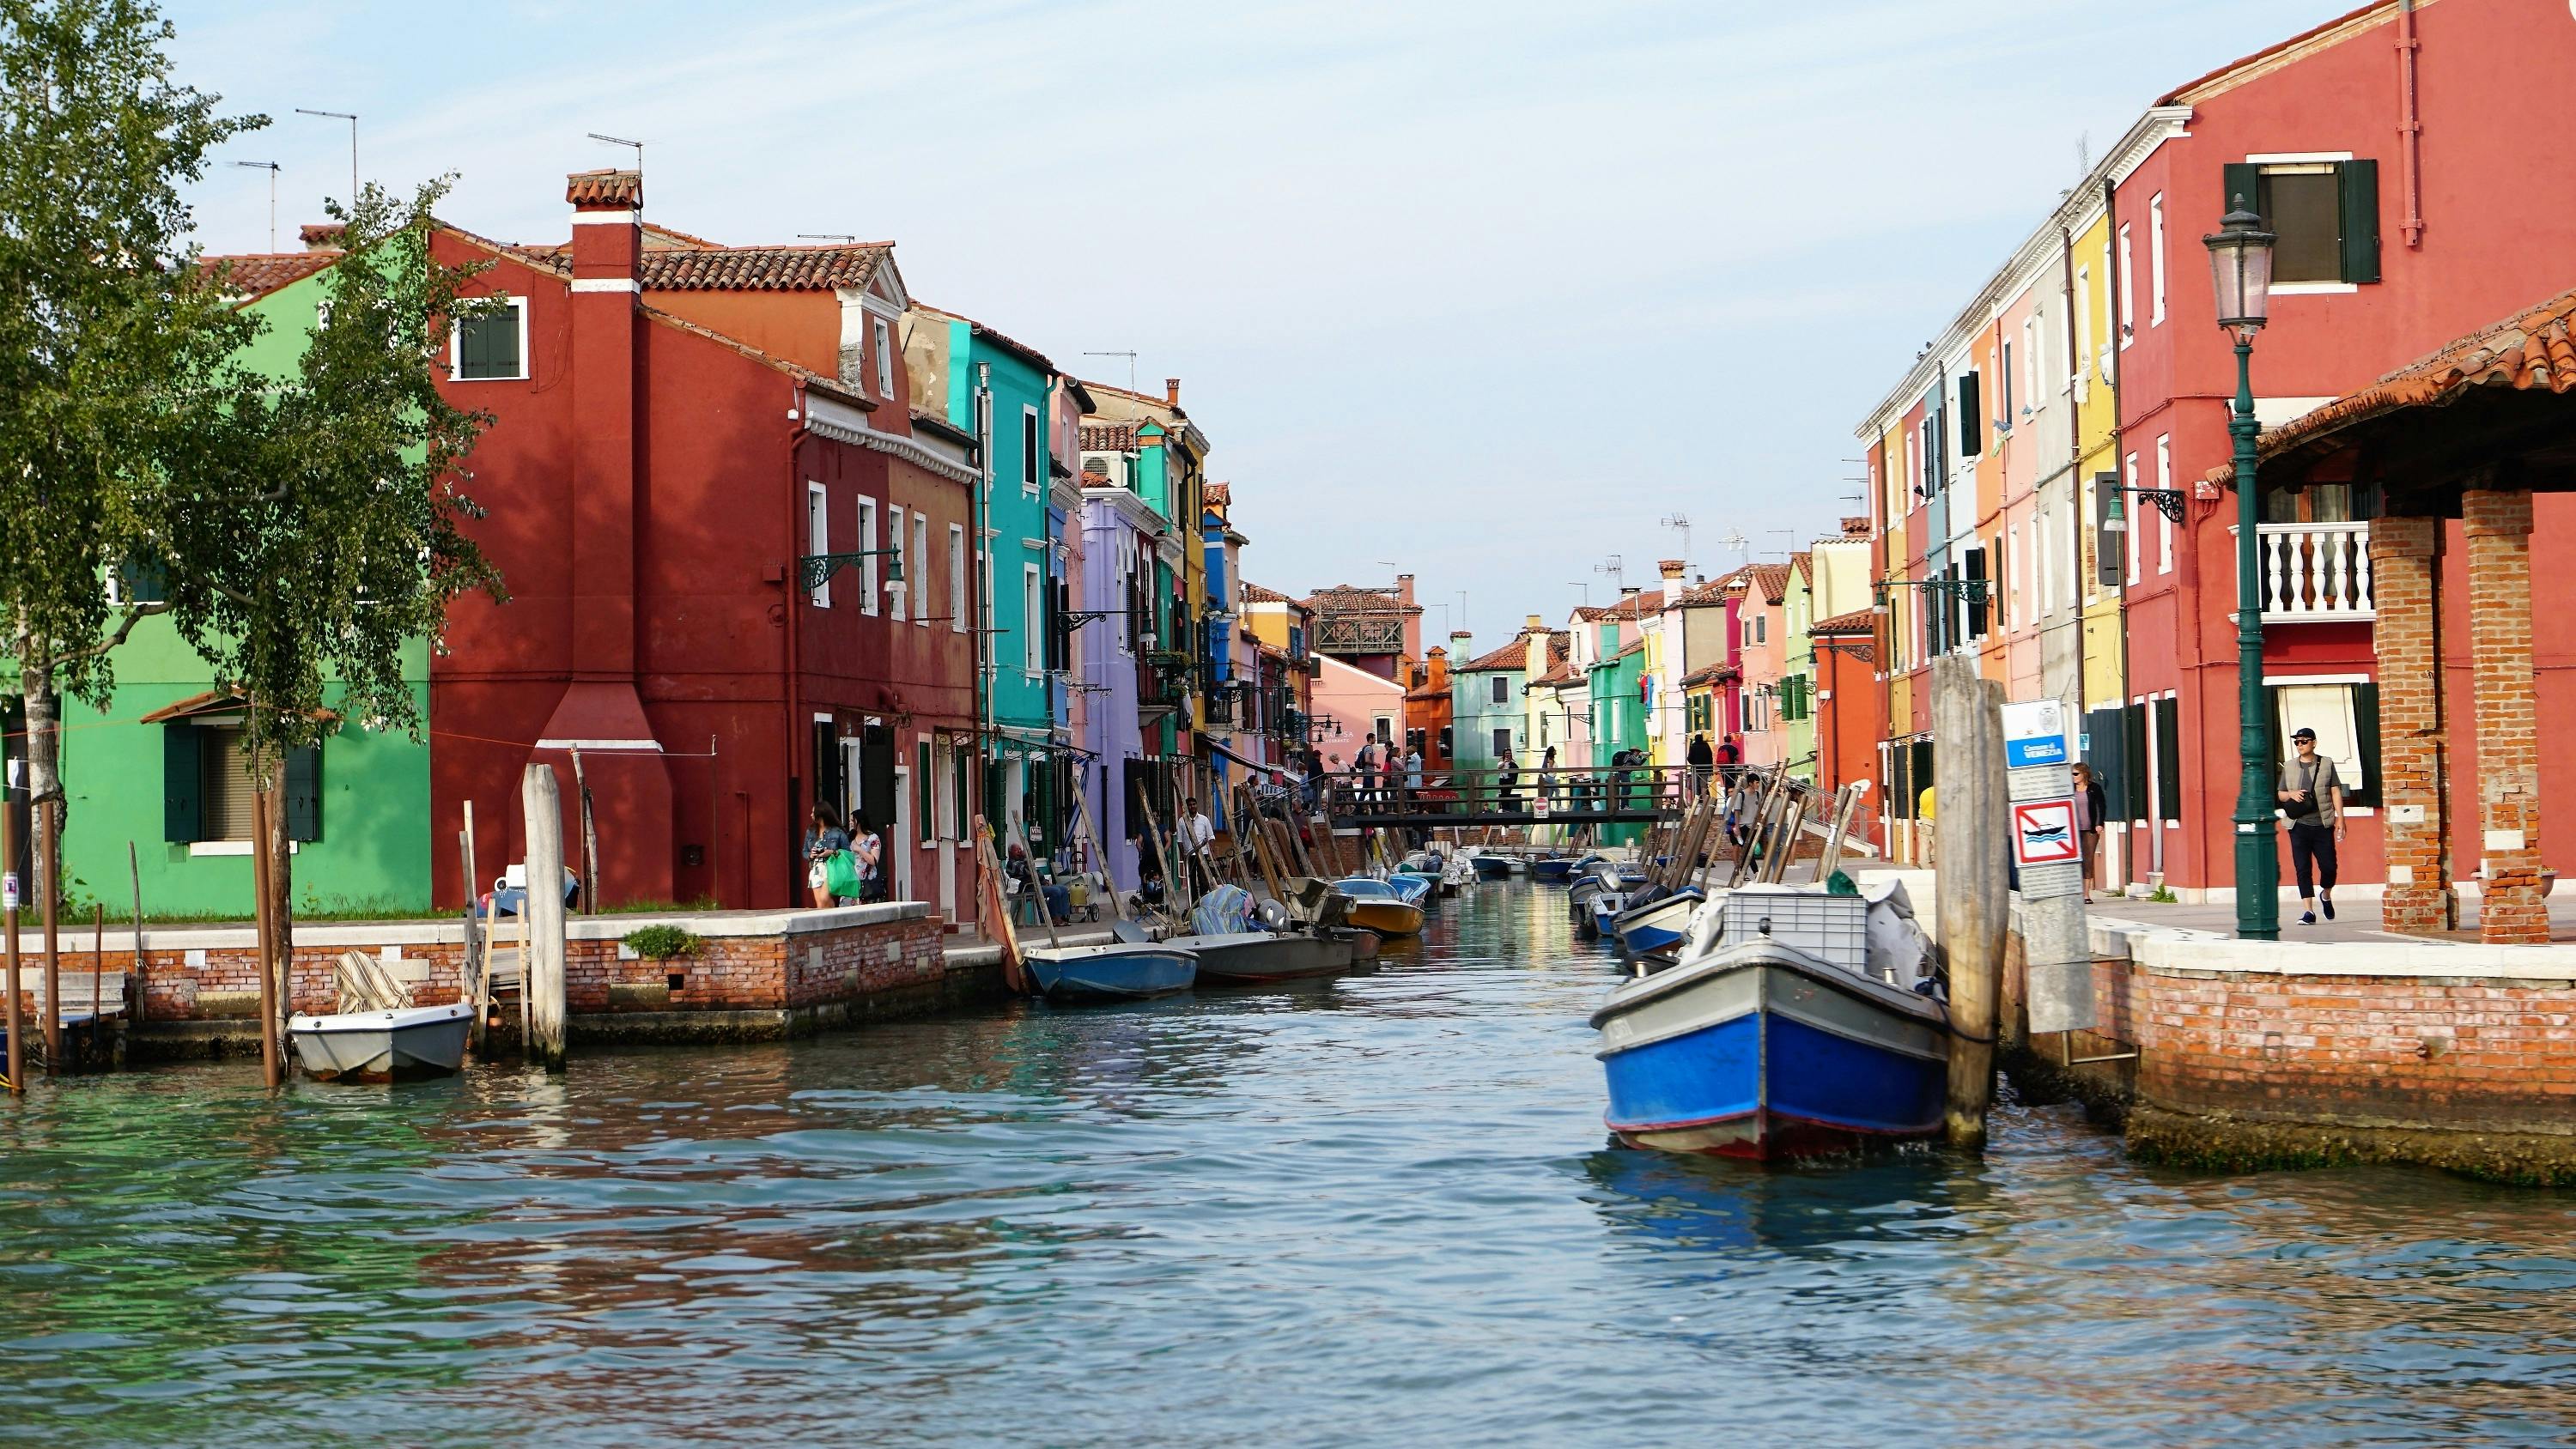 Murano Glasbläserei und Burano Spitzenklöppeln Private Bootstour in Venedig